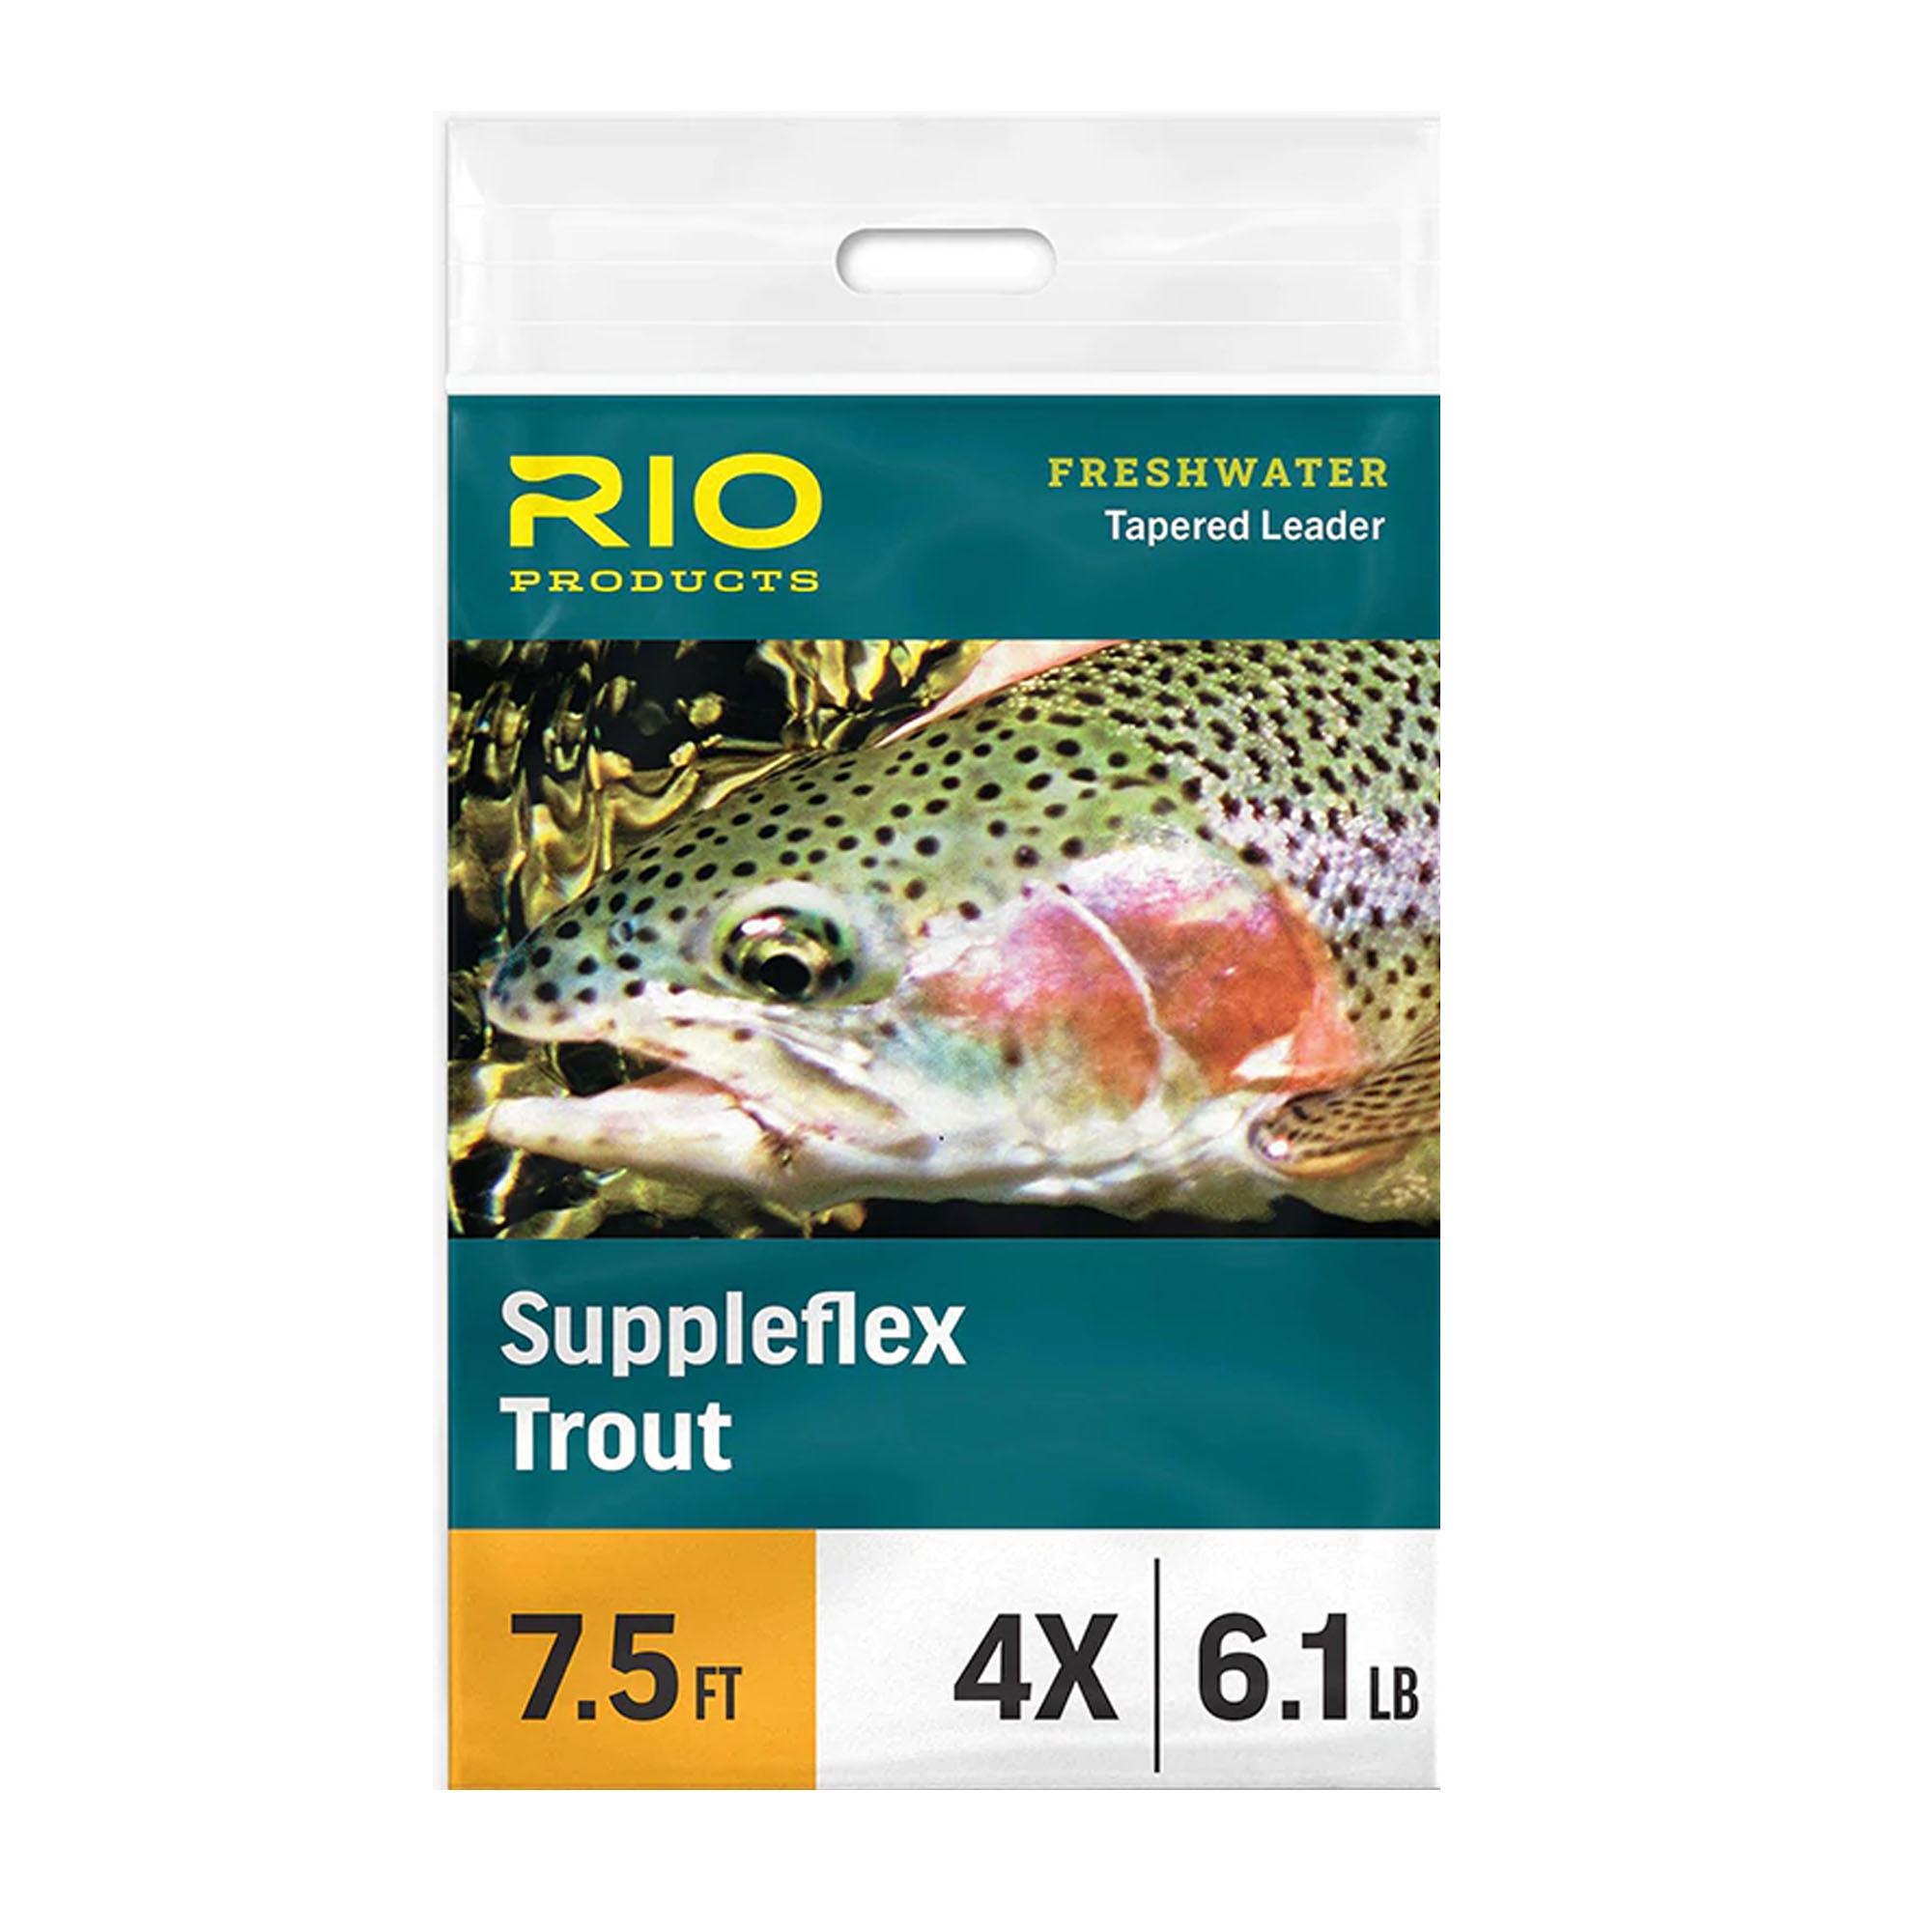 RIO Suppleflex Trout Leader – Guide Flyfishing, Fly Fishing Rods, Reels, Sage, Redington, RIO